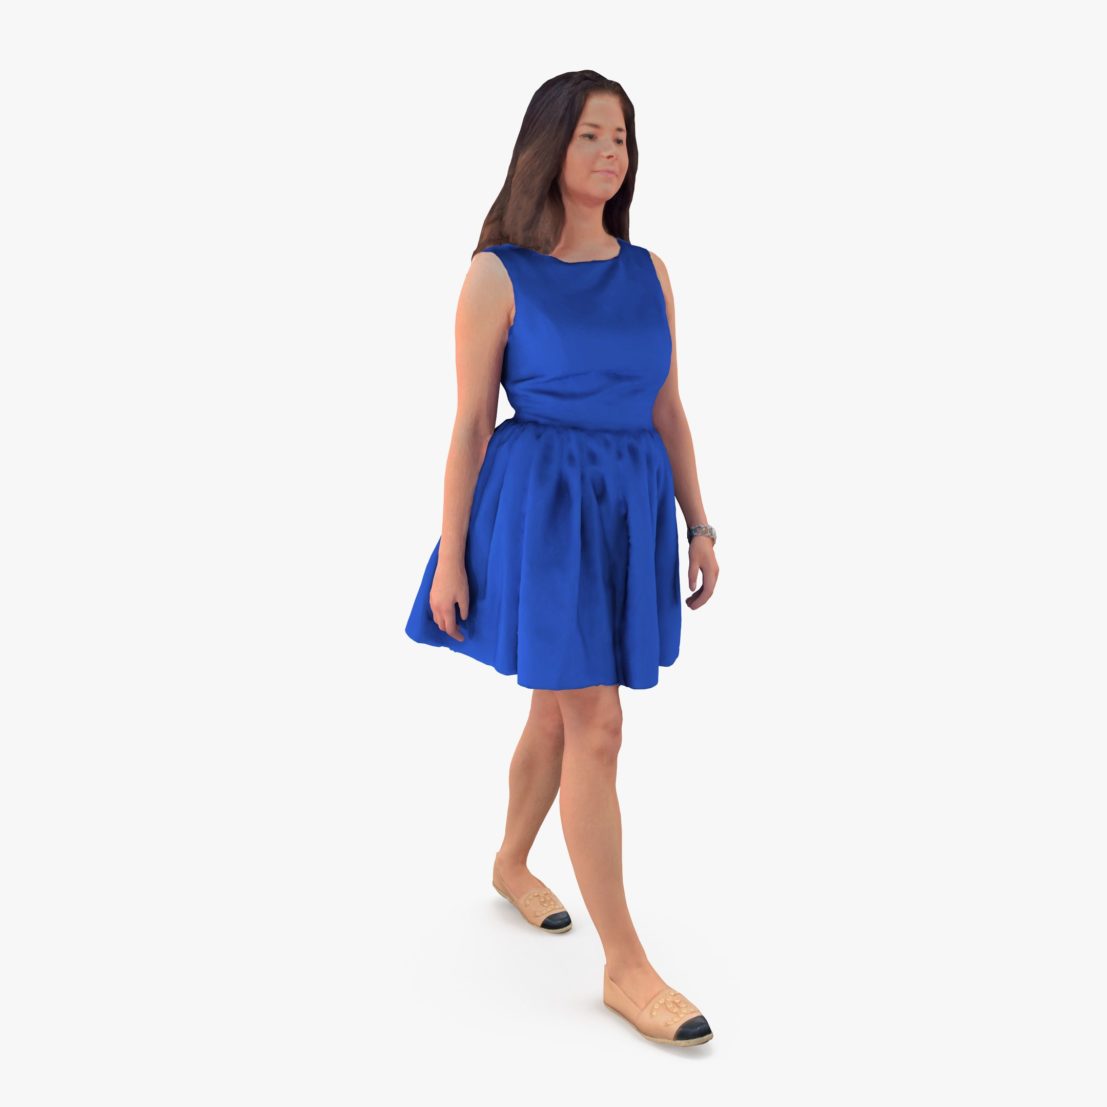 Urban Girl Dress 3D Model | 3DTree Scanning Studio